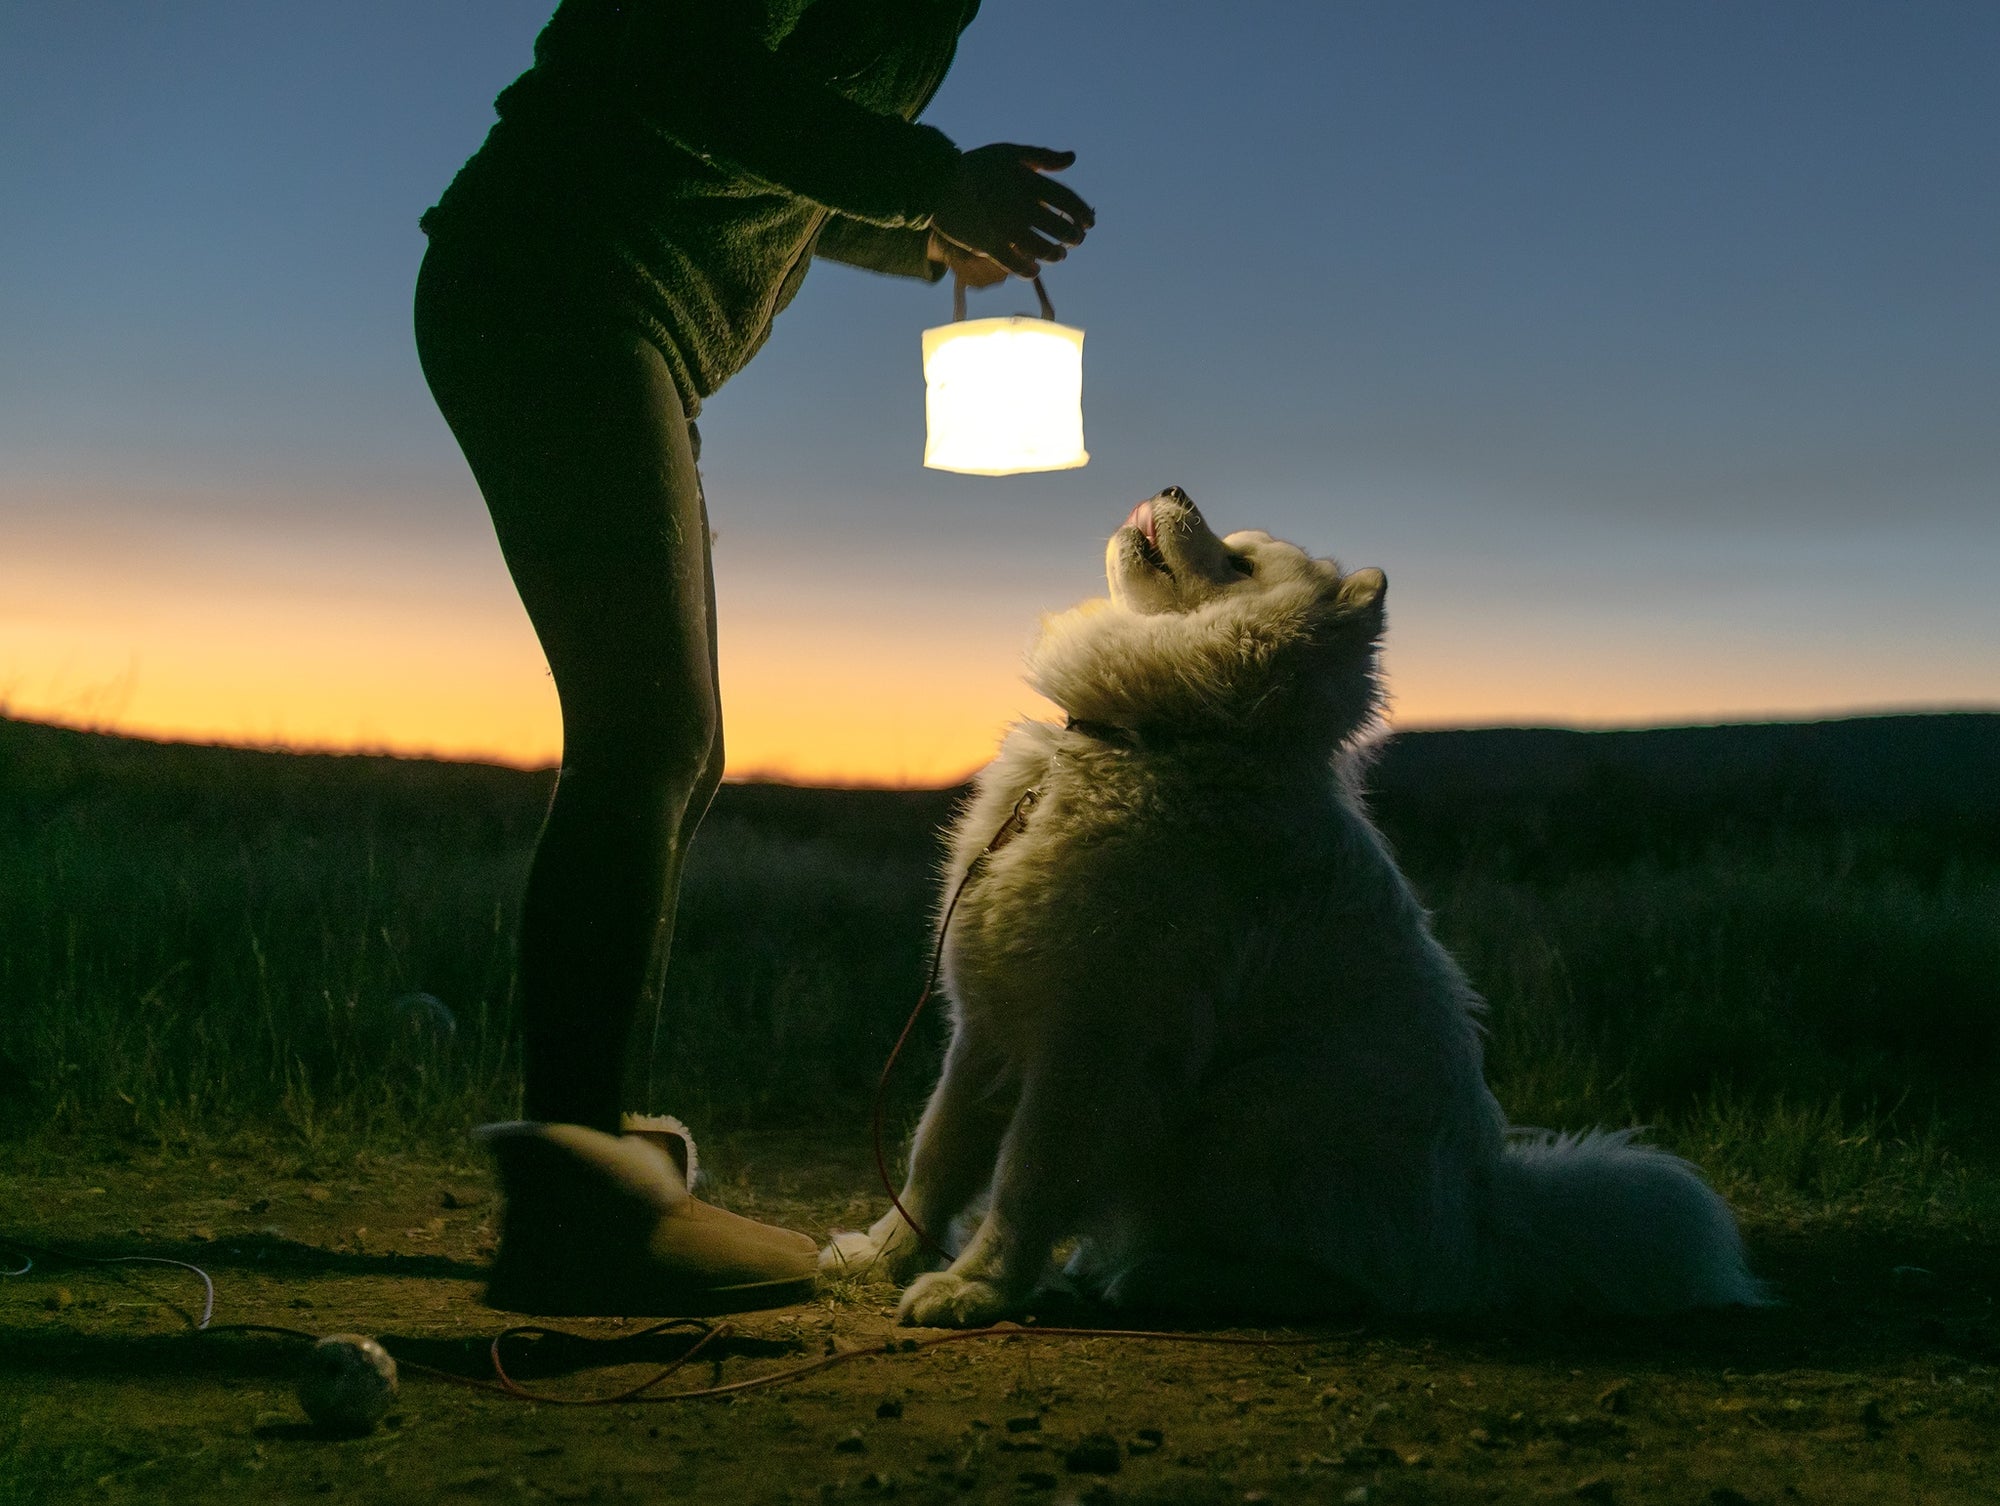 Dog admiring LuminAID lantern at sunset. Source: Nick Zupancich